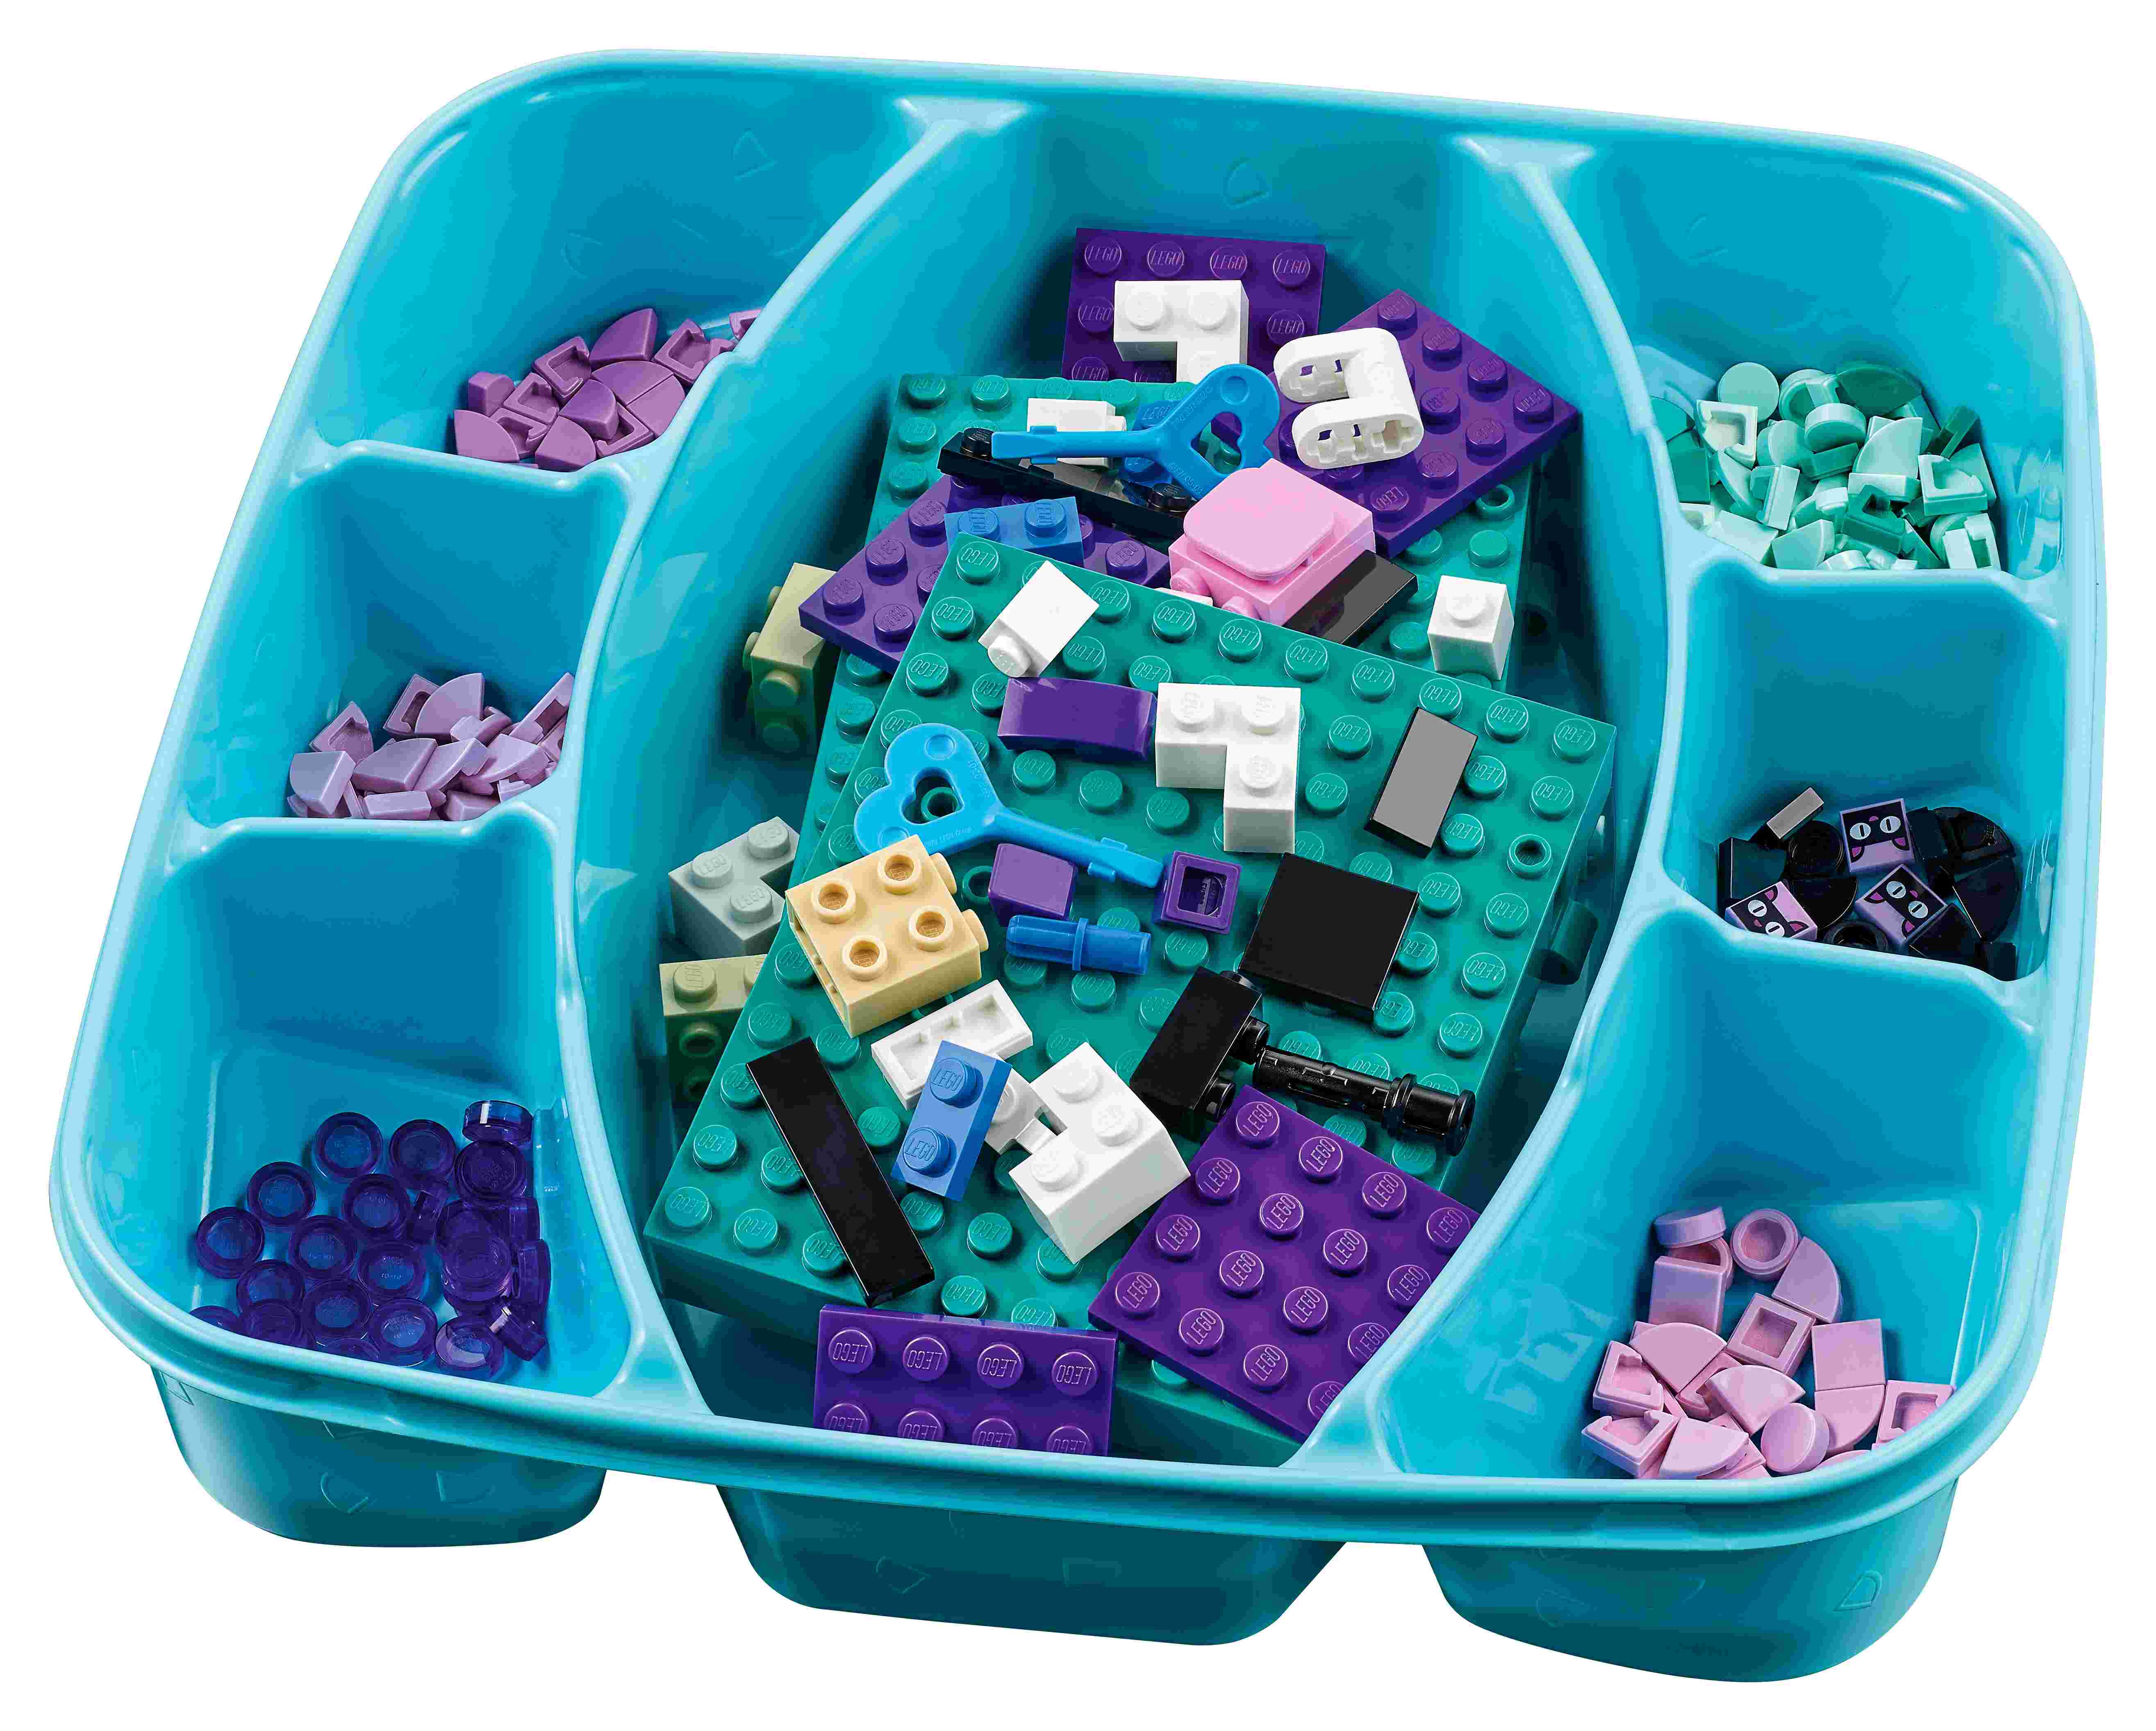 LEGO 41925 DOTS Geheimbox mit Schlüsselhalter, Raumaccessoires & Dekoideen